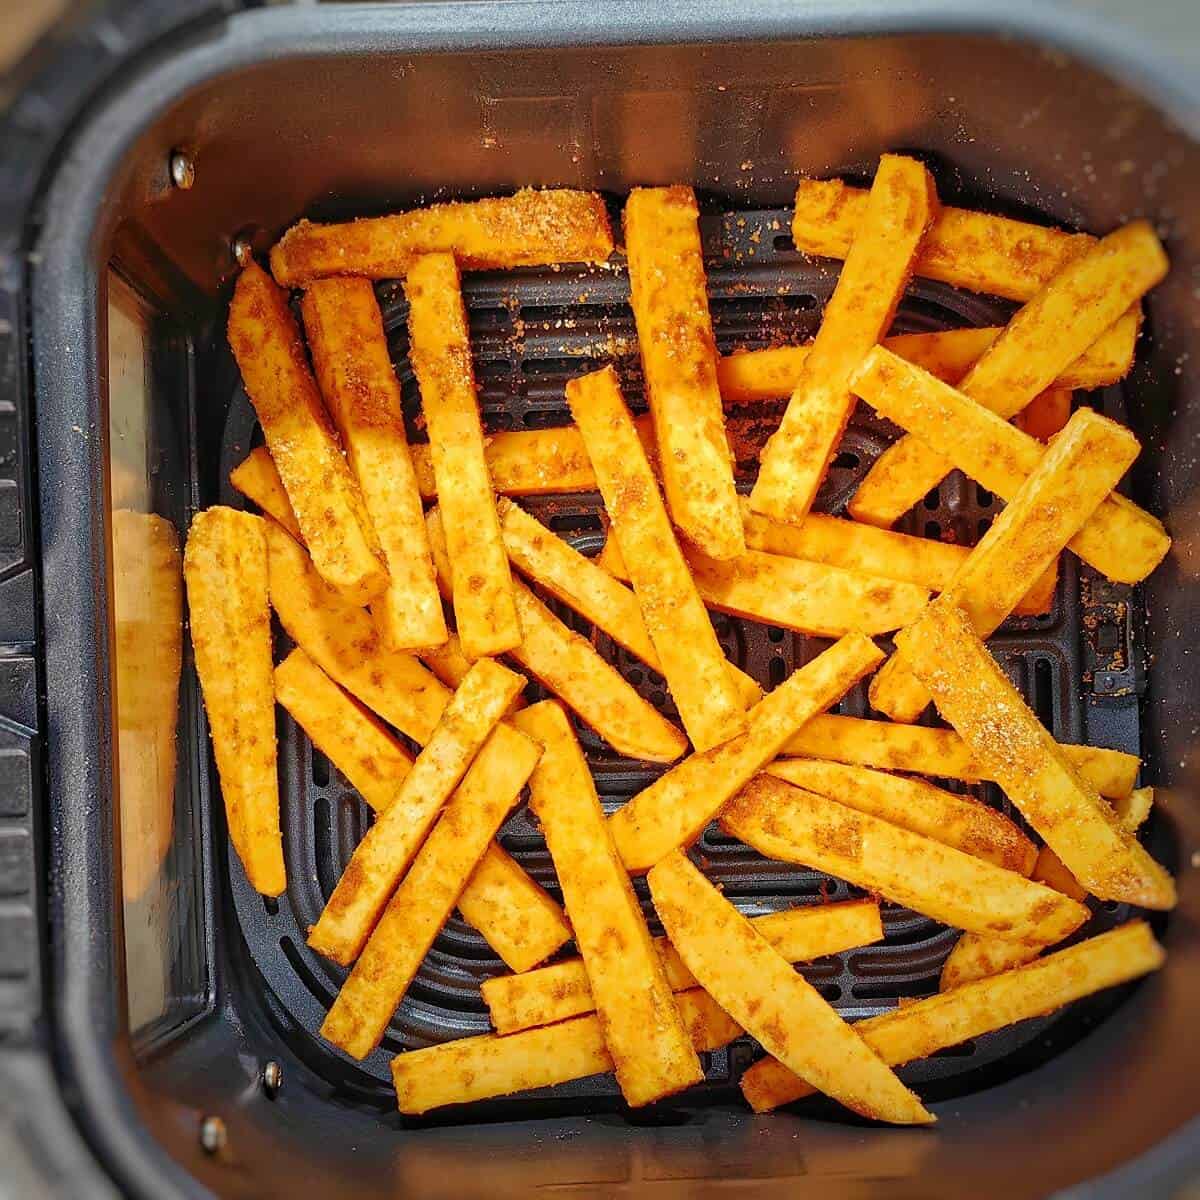 arrange the sweet potato fries evenly